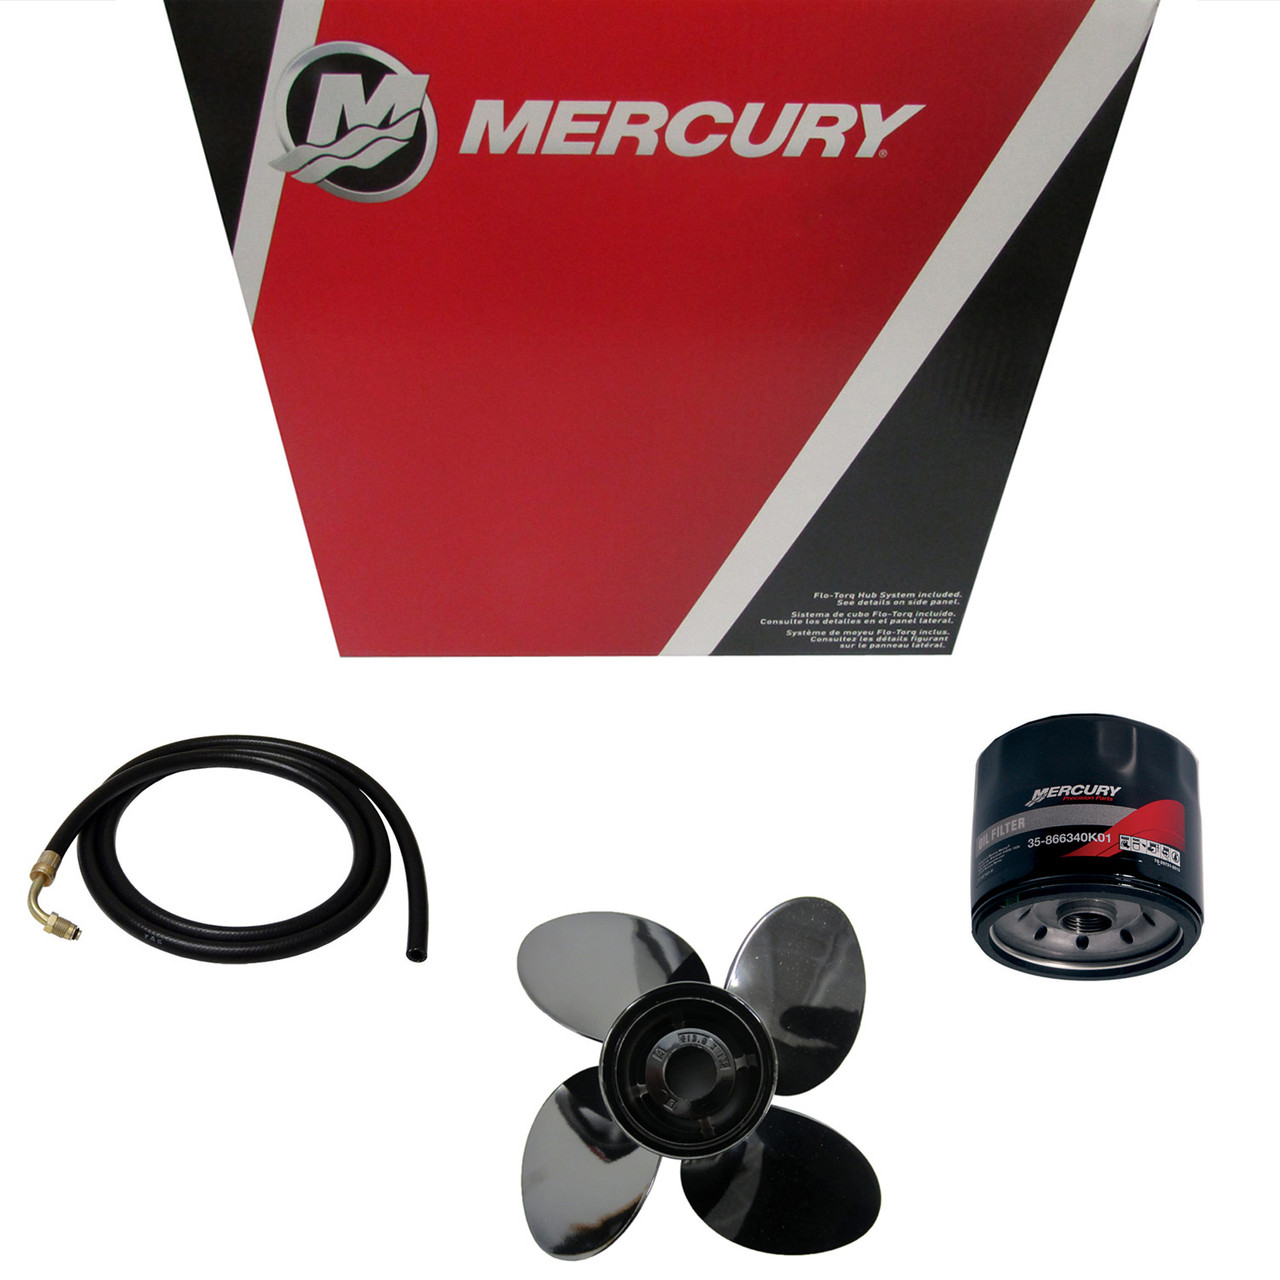 Mercury Marine / Mercruiser New OEM Stator Kit, 398-832074A4